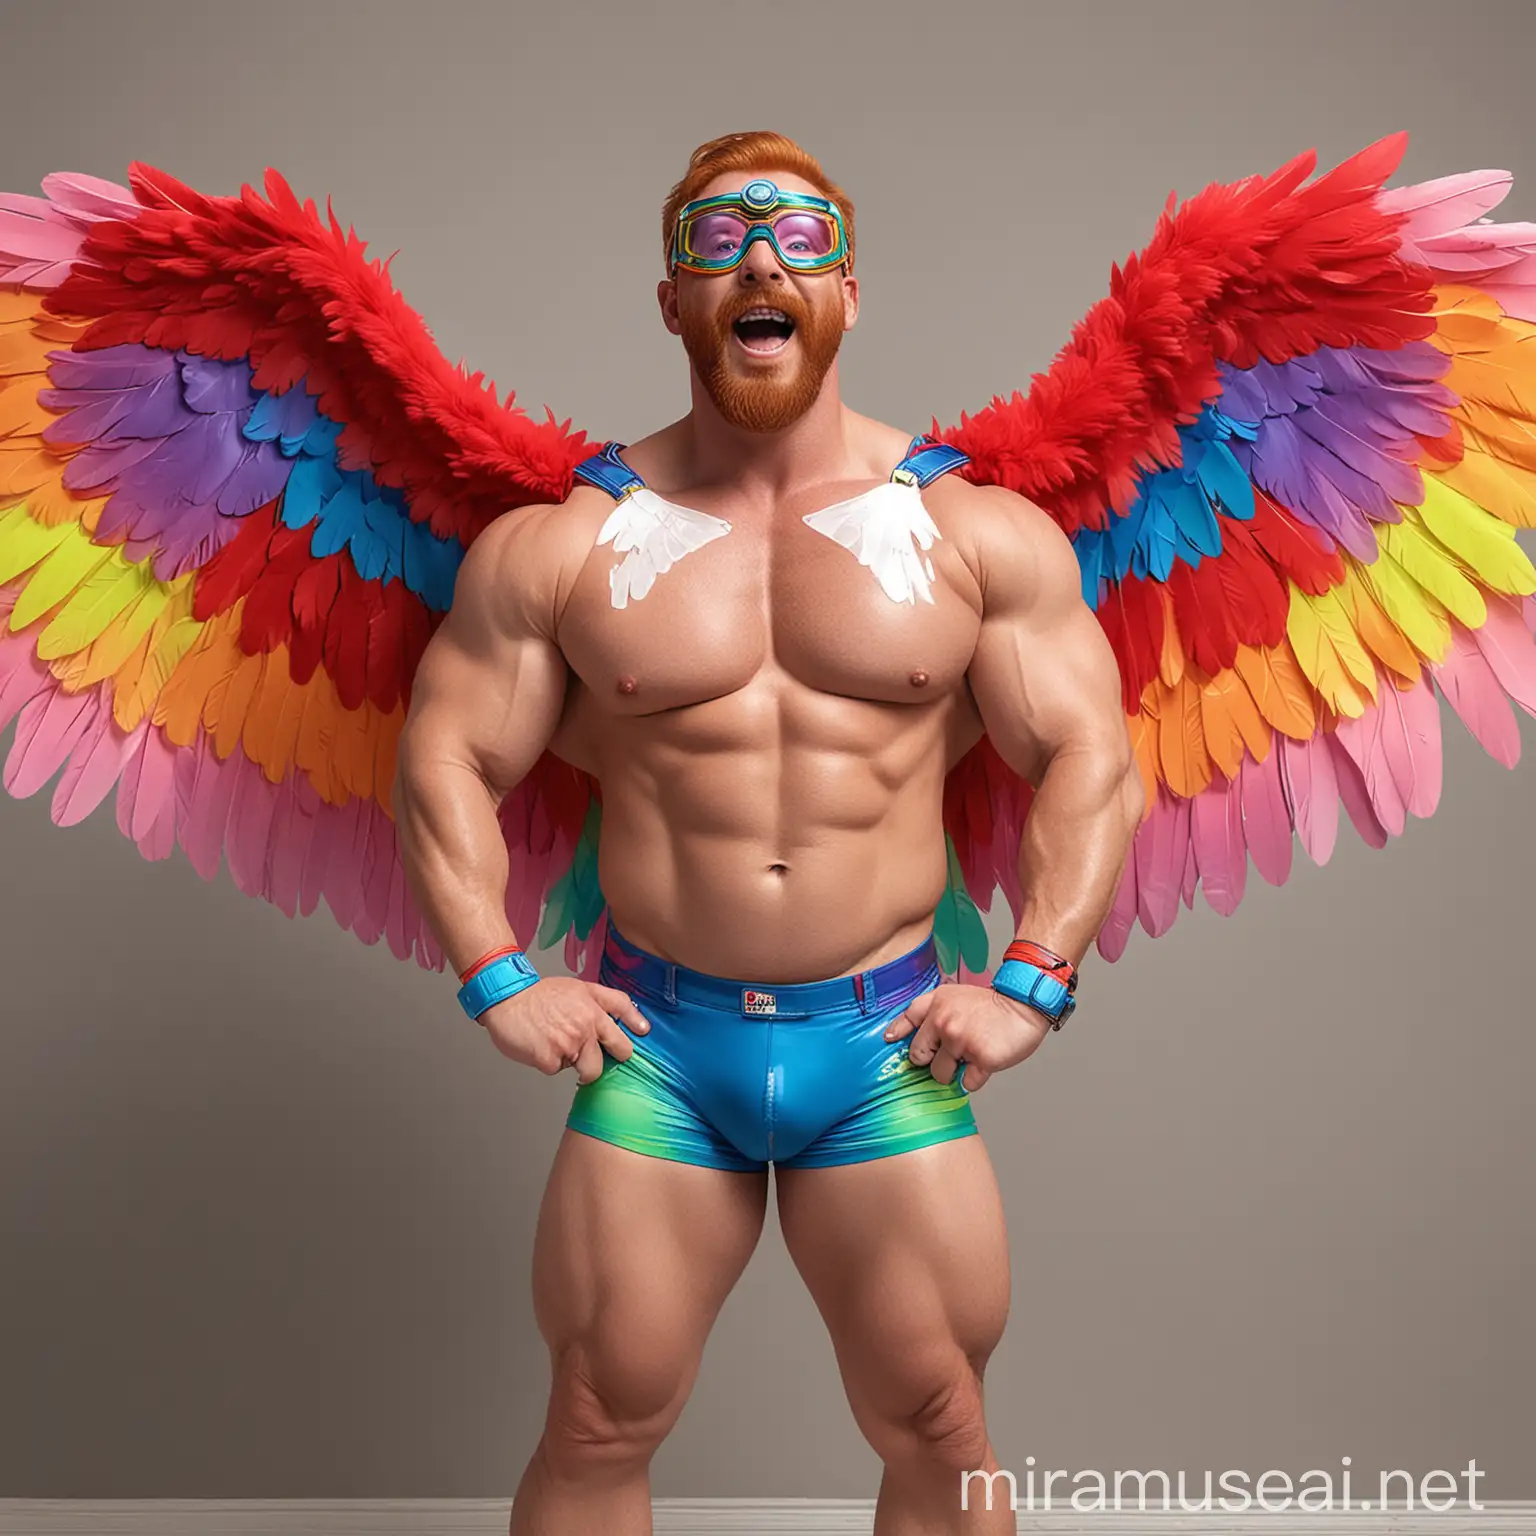 Muscular Red Head Bodybuilder Flexing Arm in Rainbow Eagle Wings Jacket